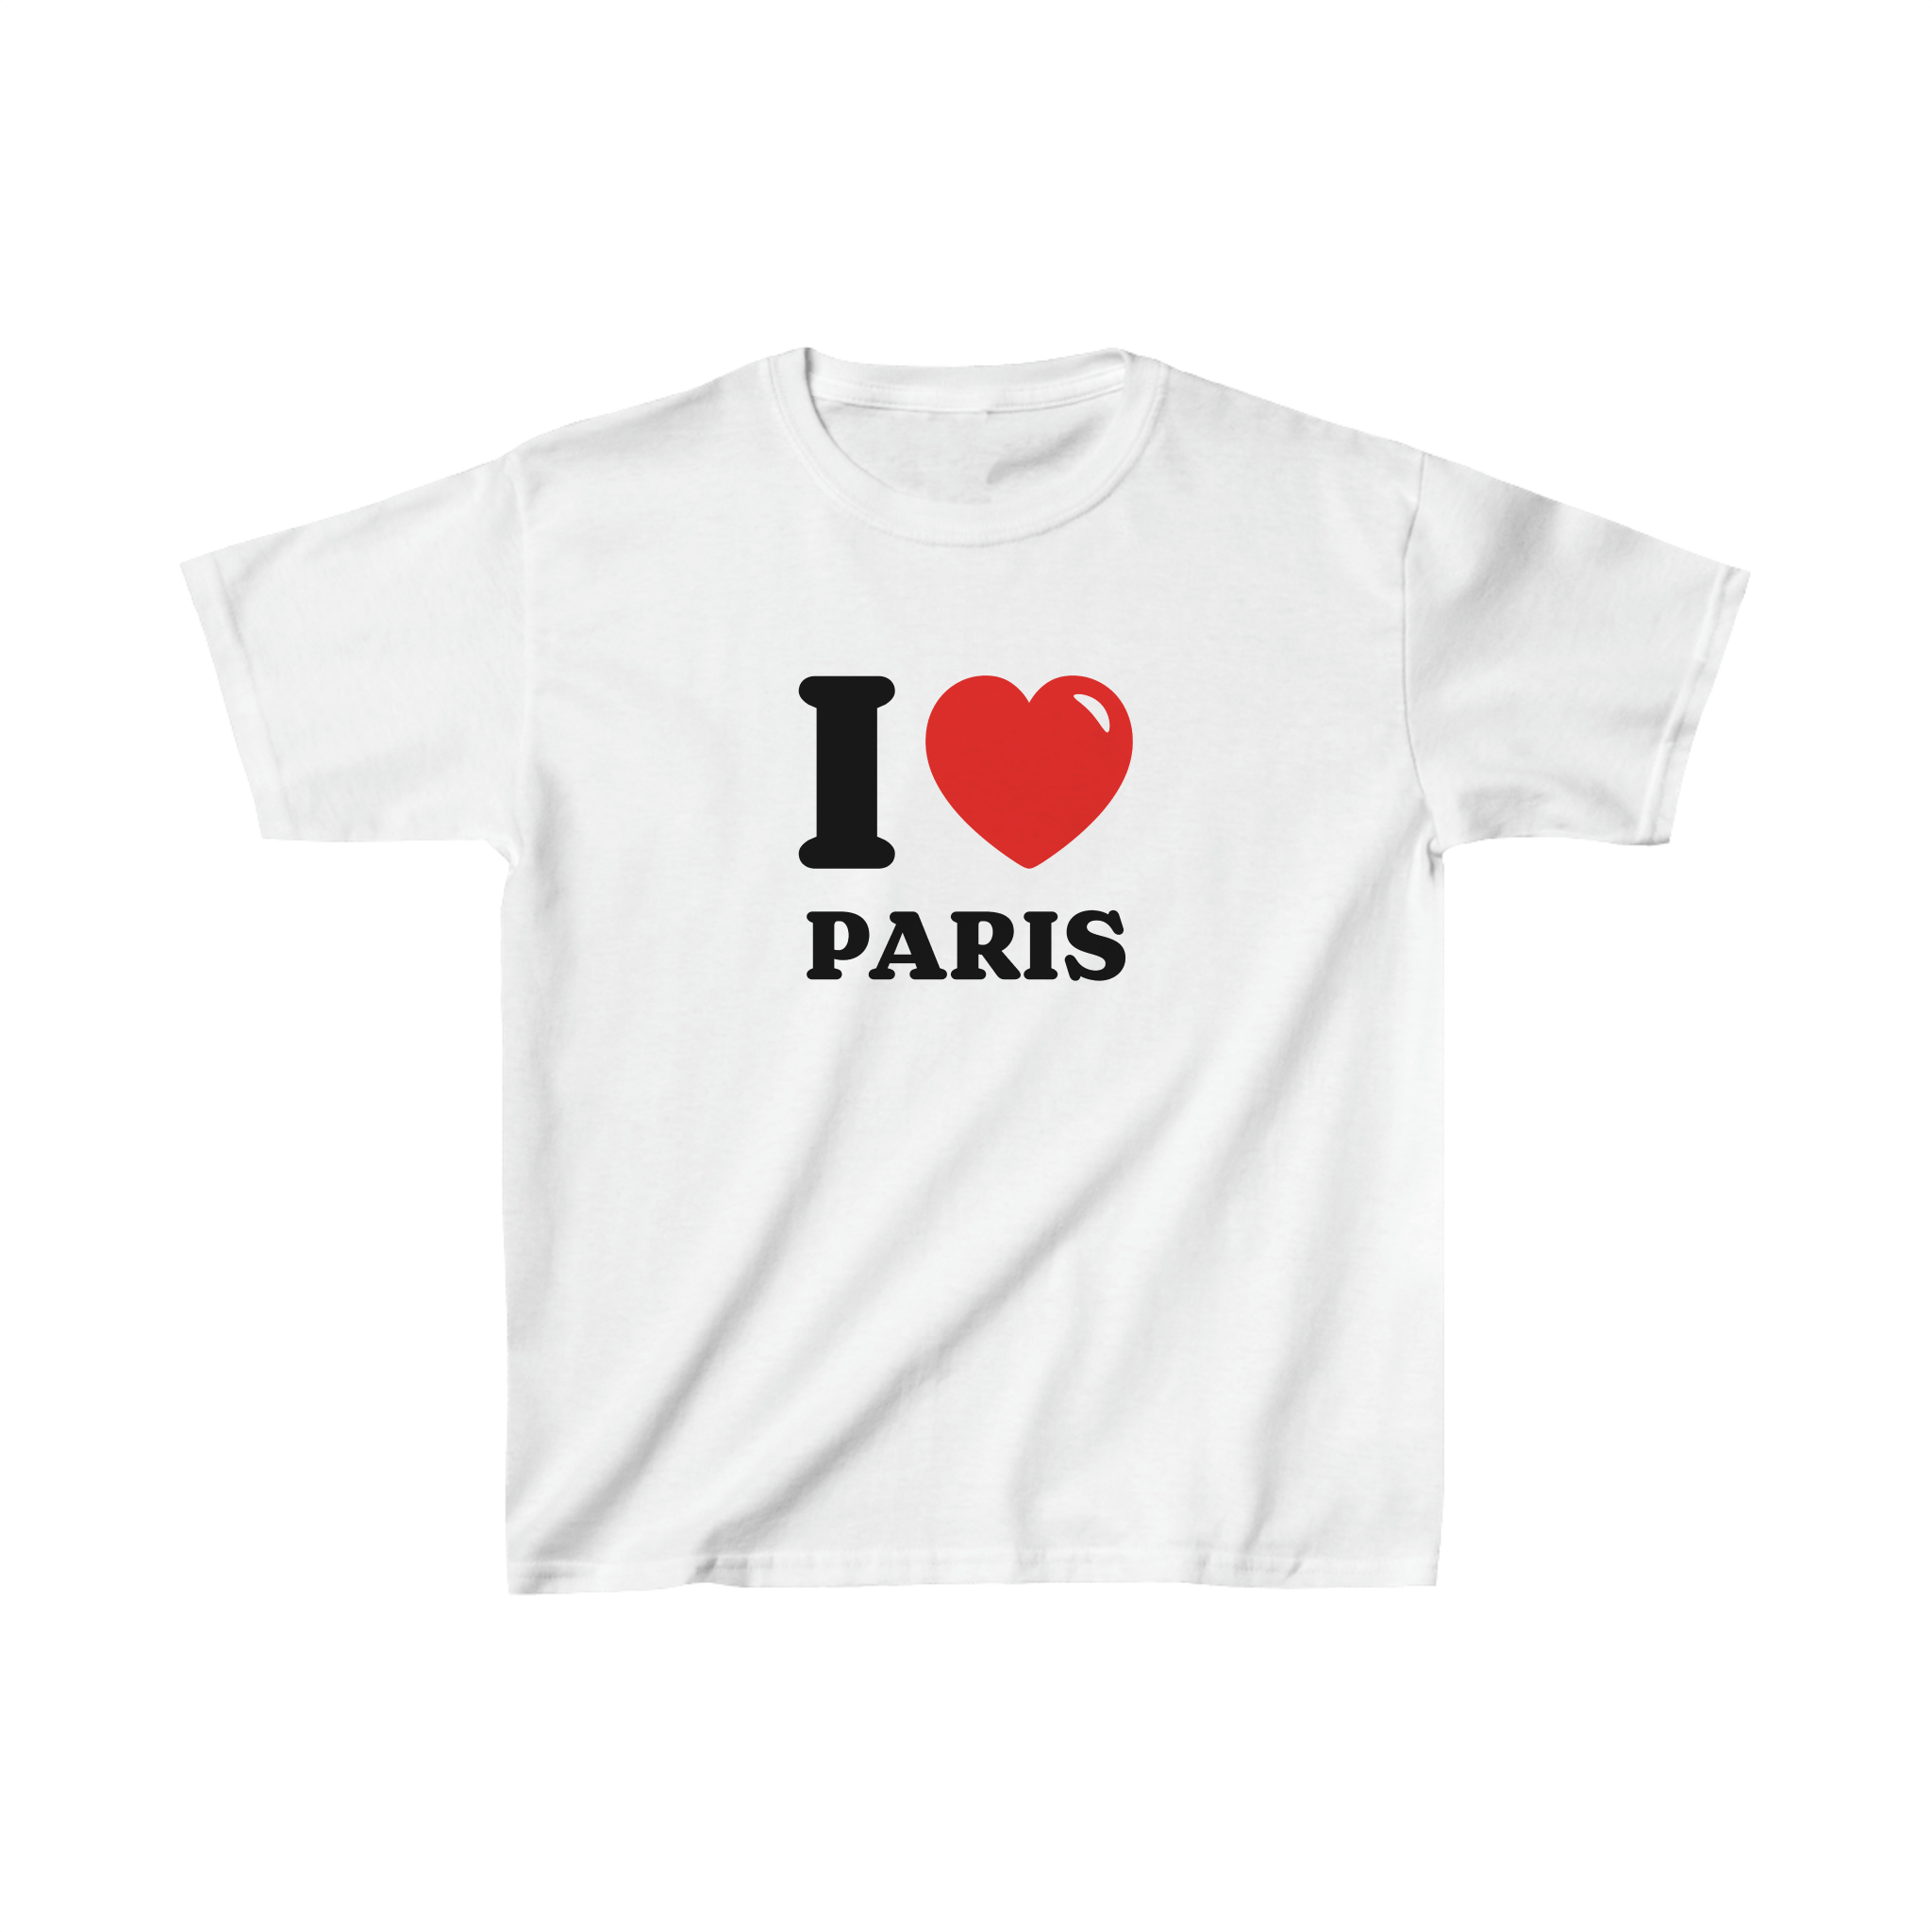 'I love Paris' baby tee - In Print We Trust